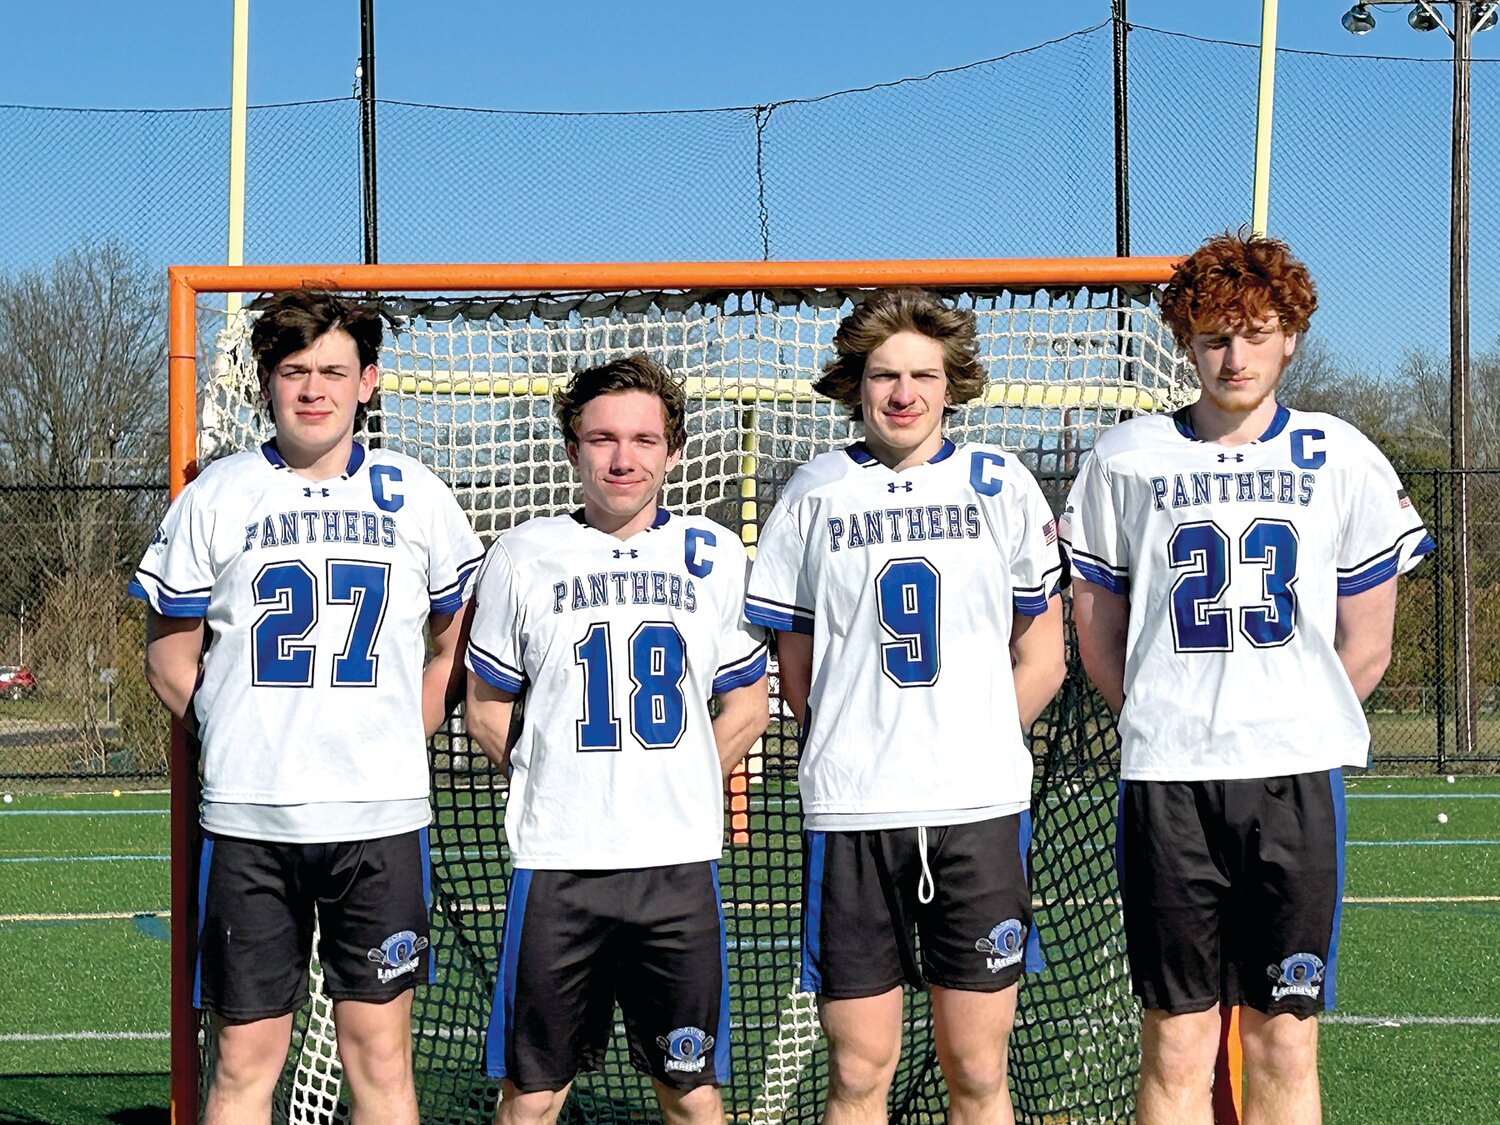 Quakertown boys lacrosse captains, from left, junior Cody Jefferson, seniors Jacob Wackerman and Jack Diliberto, and junior Colin Uhrich.